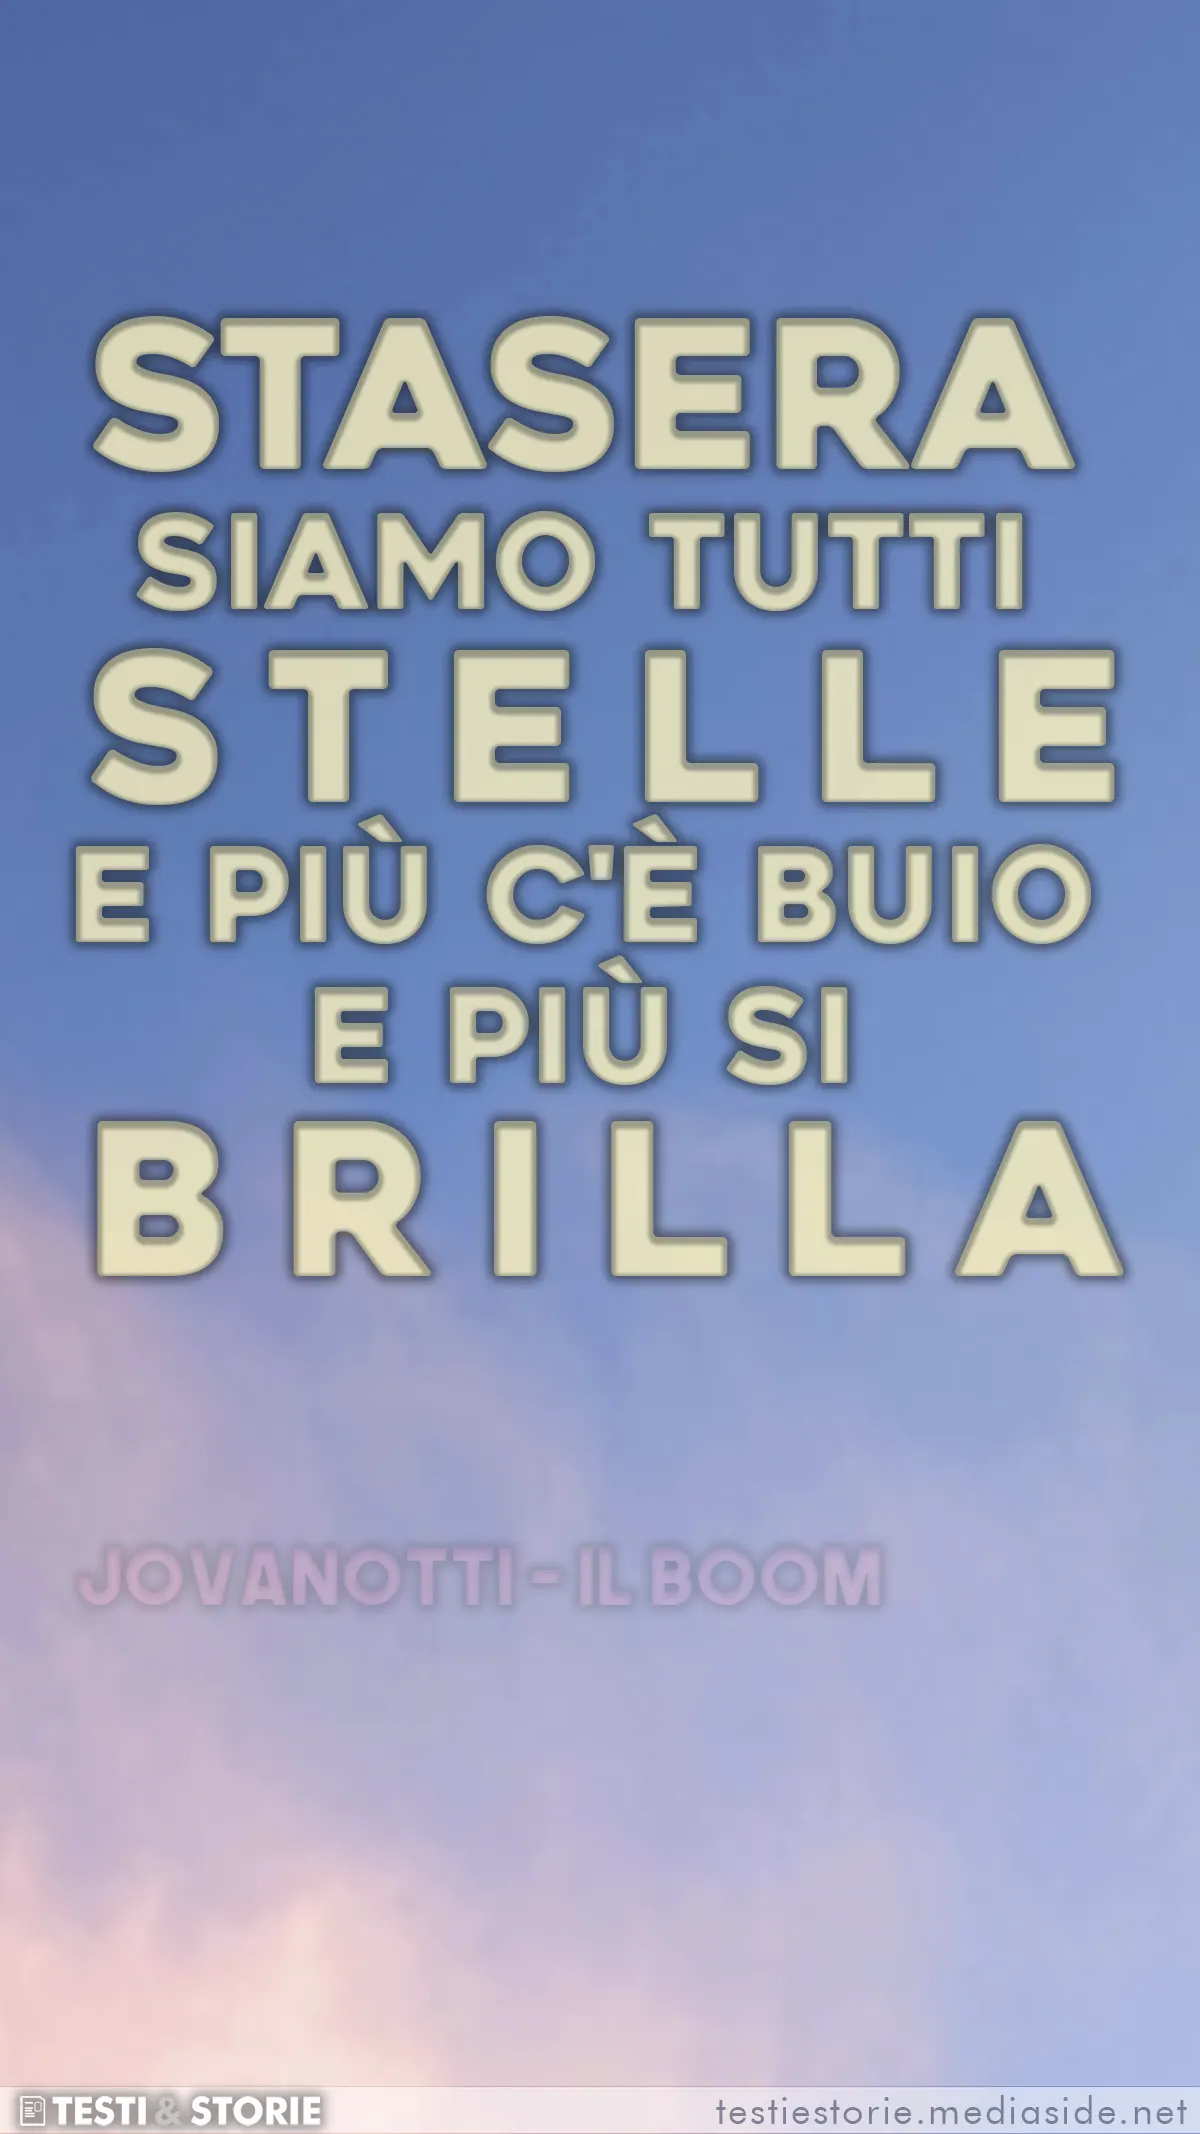 Jovanotti - Il Boom - storia - testiestorie.mediaside.net